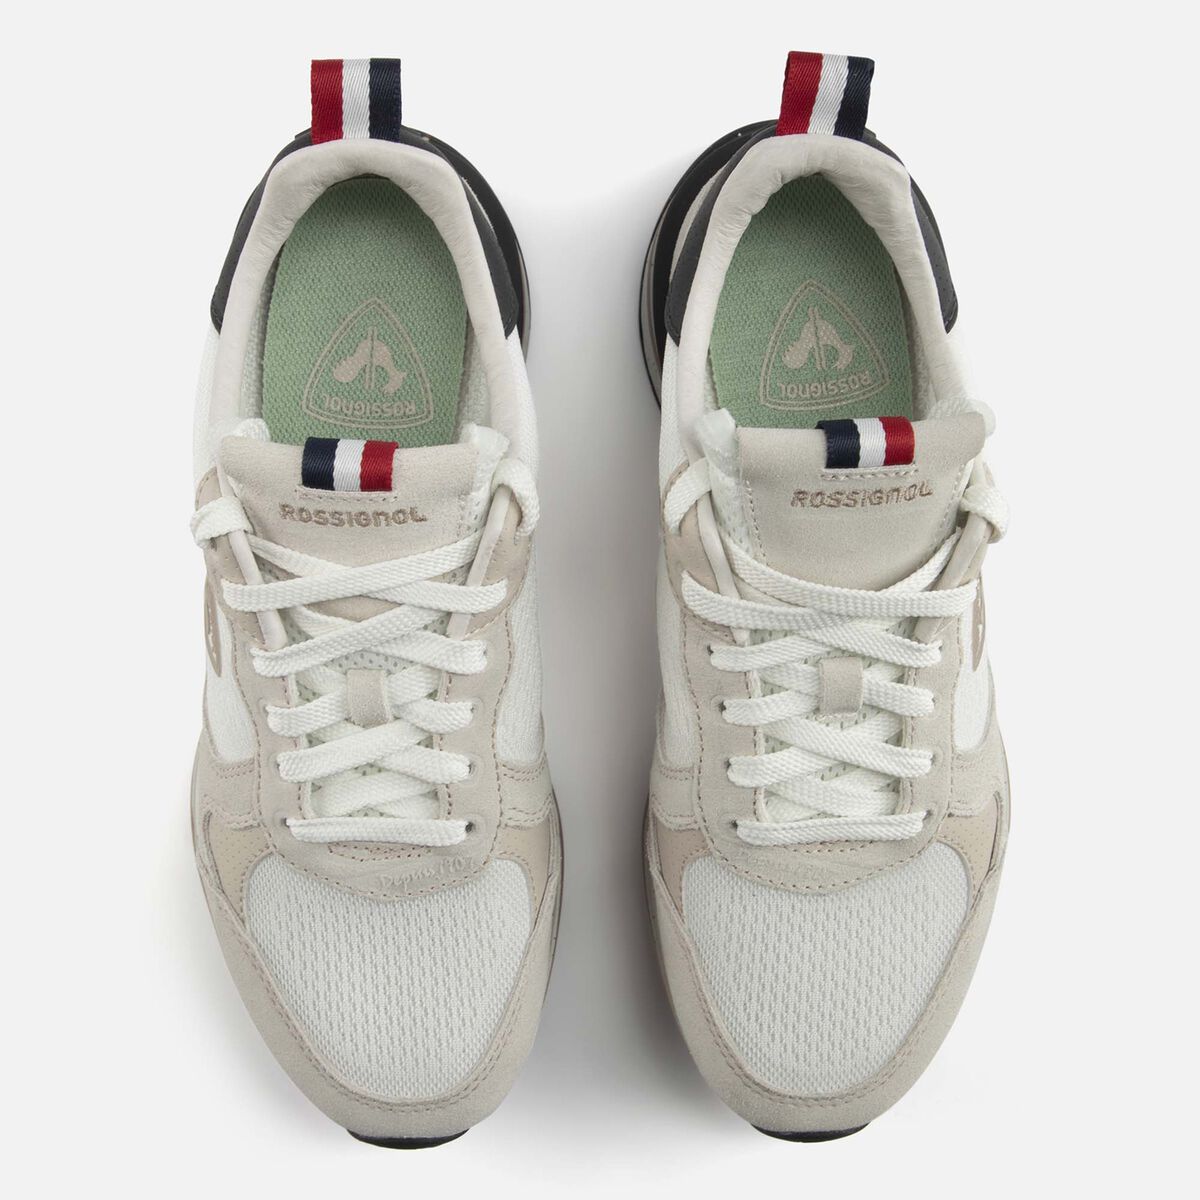 Rossignol Men's Heritage Retro Sneakers white